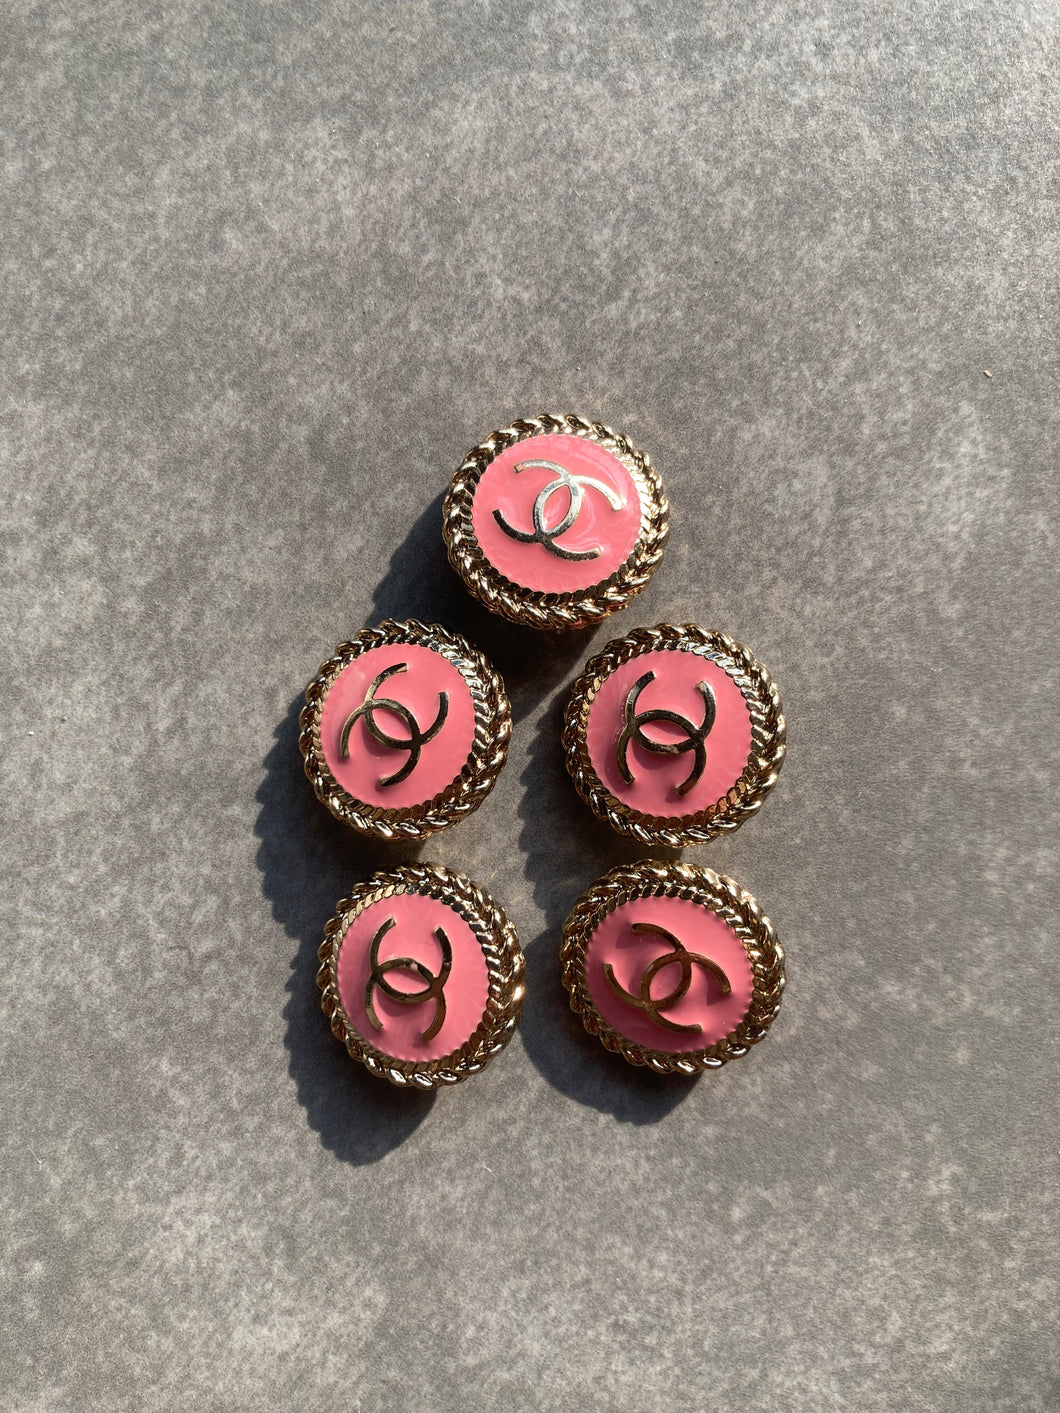 Handmade Designer Pink Chanel Buttons for Custom Apparel